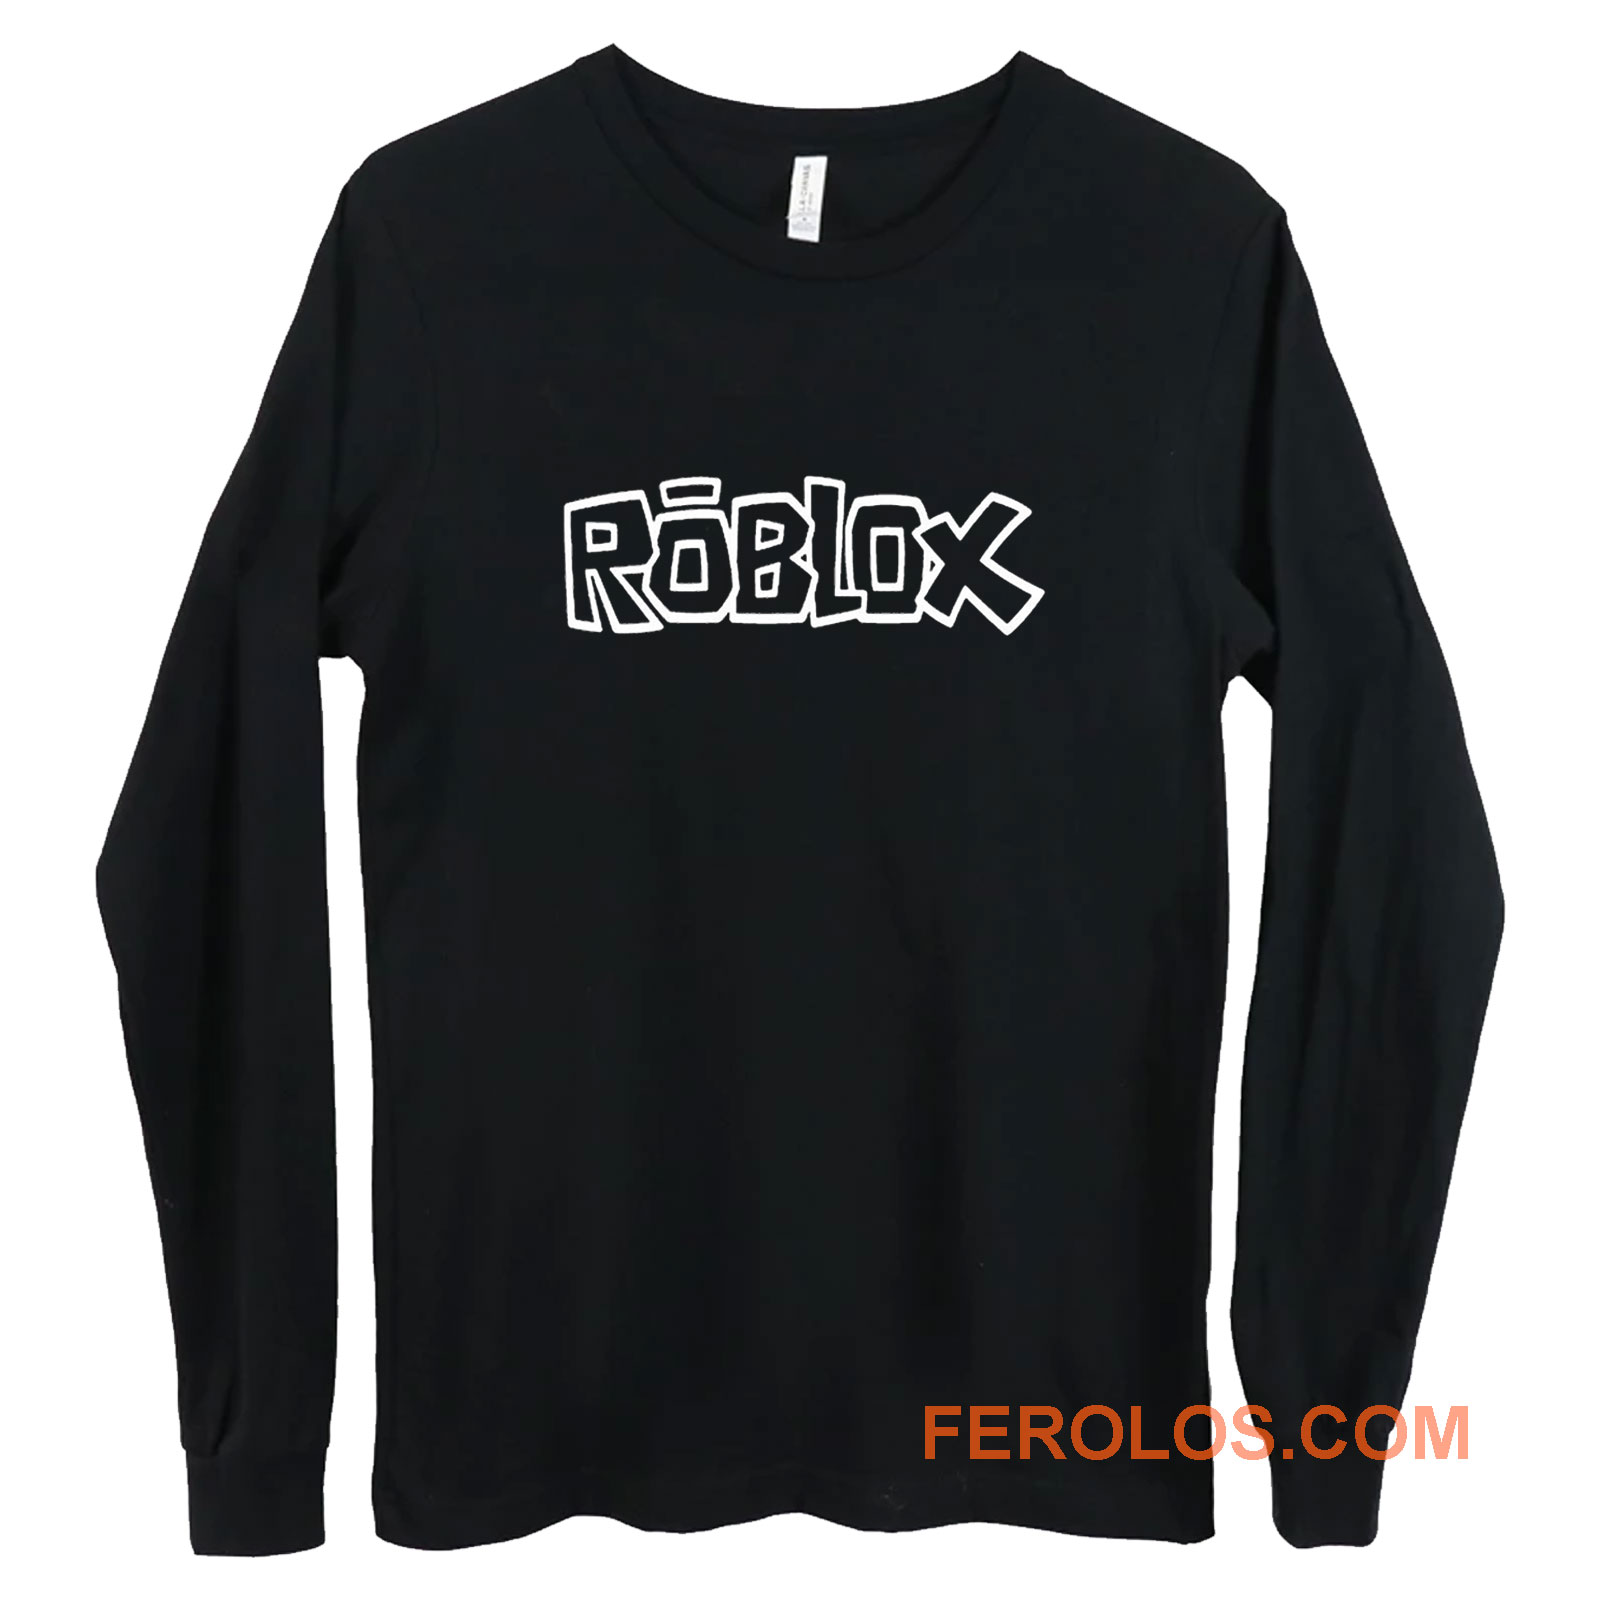 Roblox Long Sleeve | FEROLOS.COM